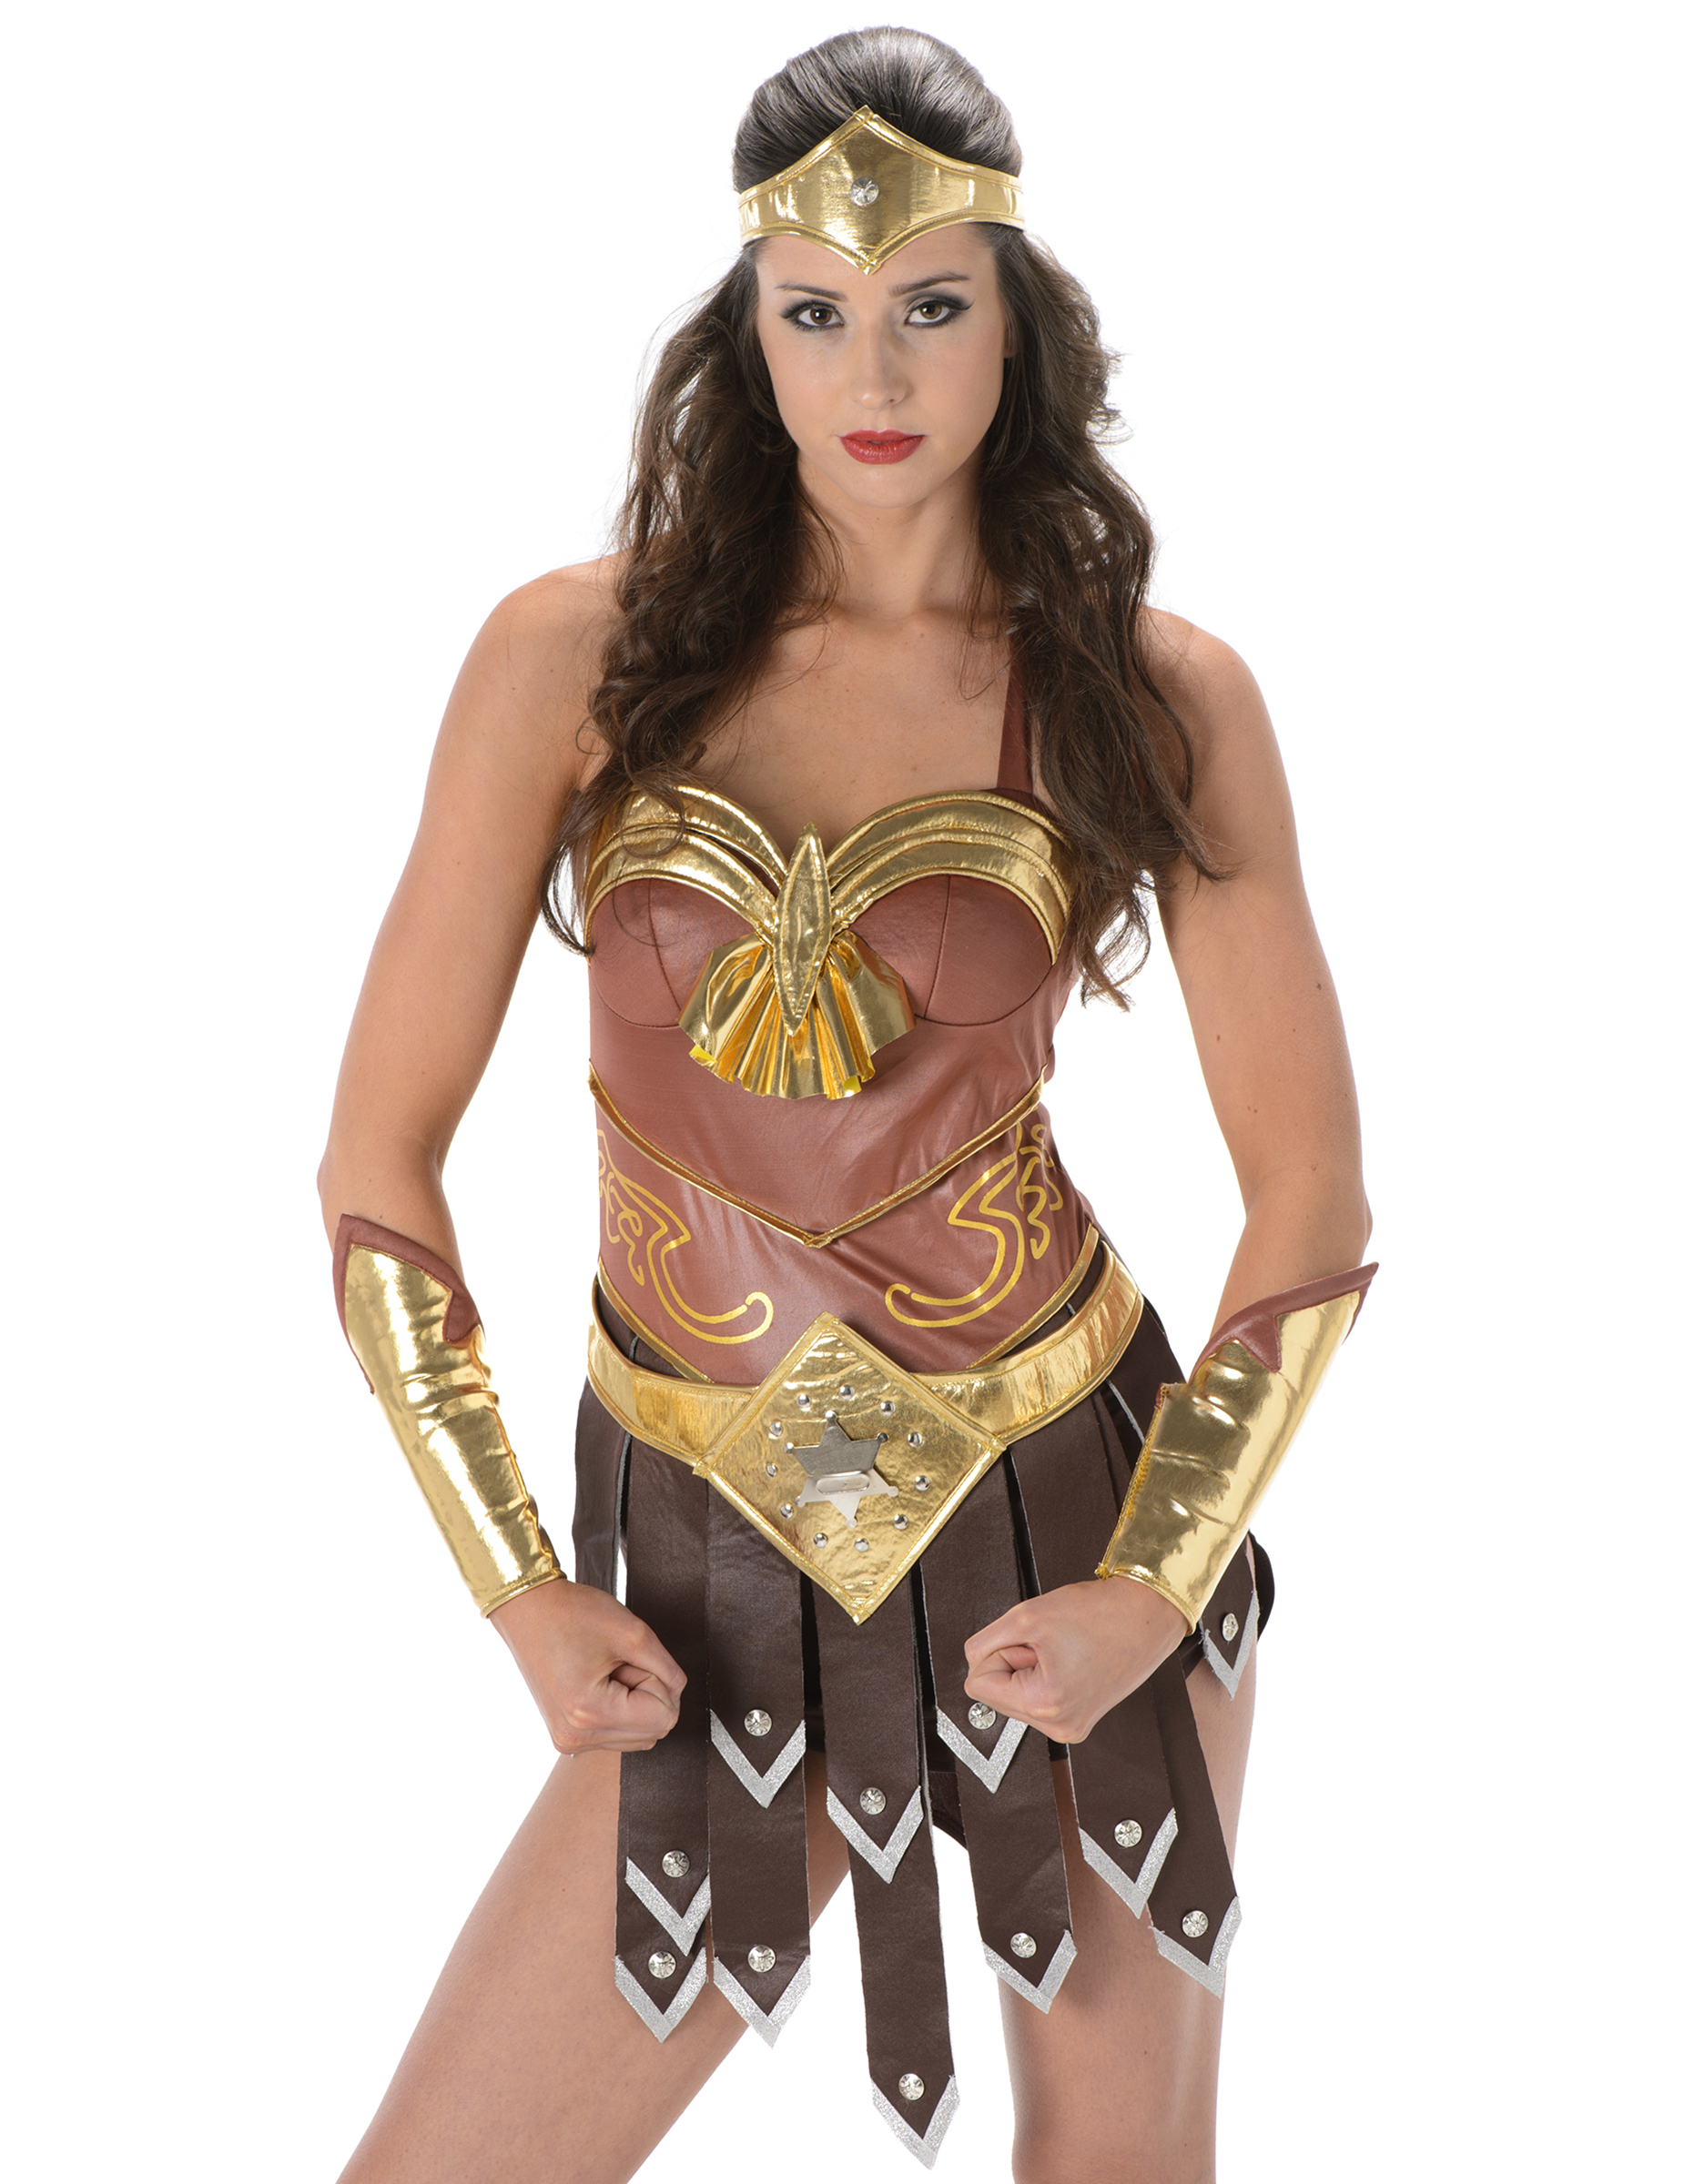 Gladiator Girl Costume - Costume Wonderland.